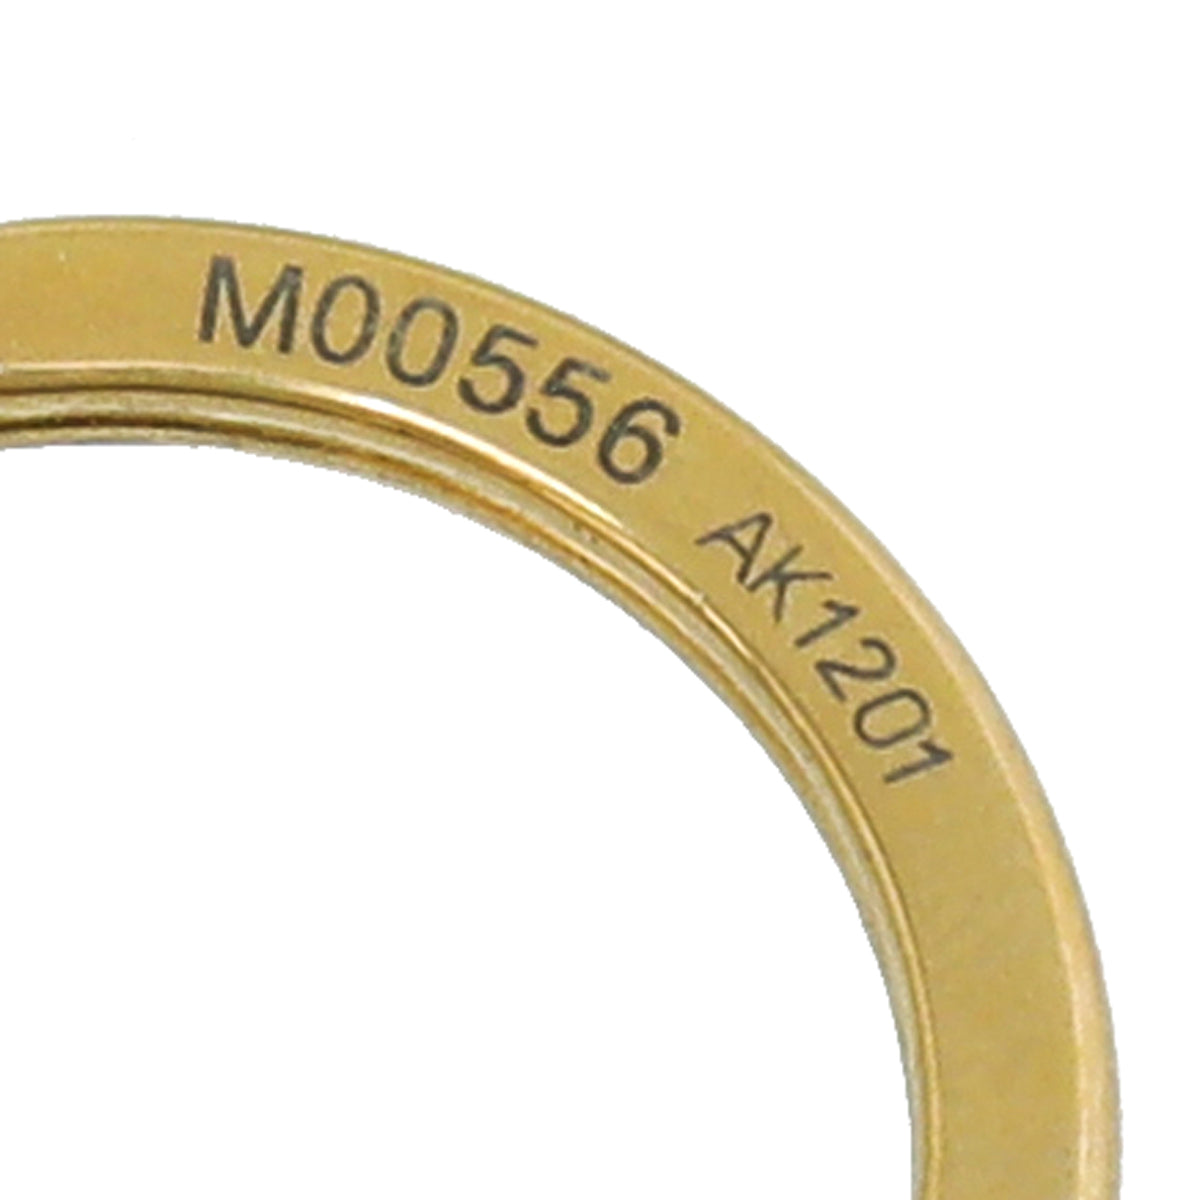 Japanese Brass Flat Split Key Ring